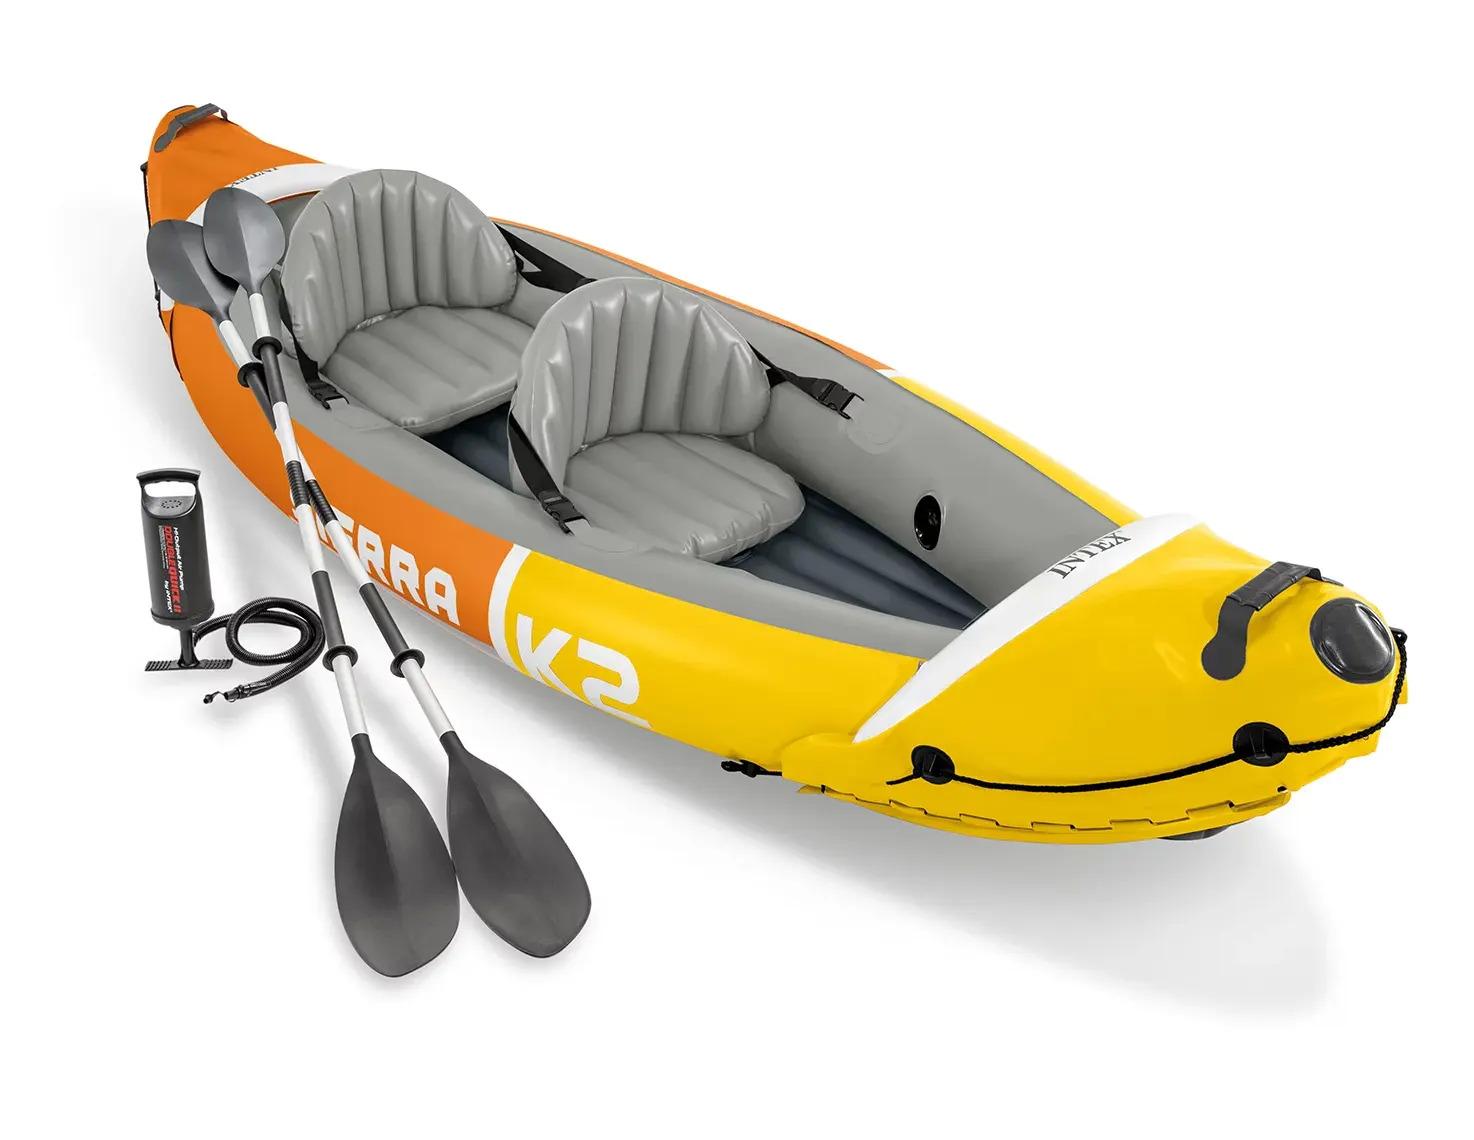 Intex Sierra K2 Inflatable Kayak for $69.99 Shipped